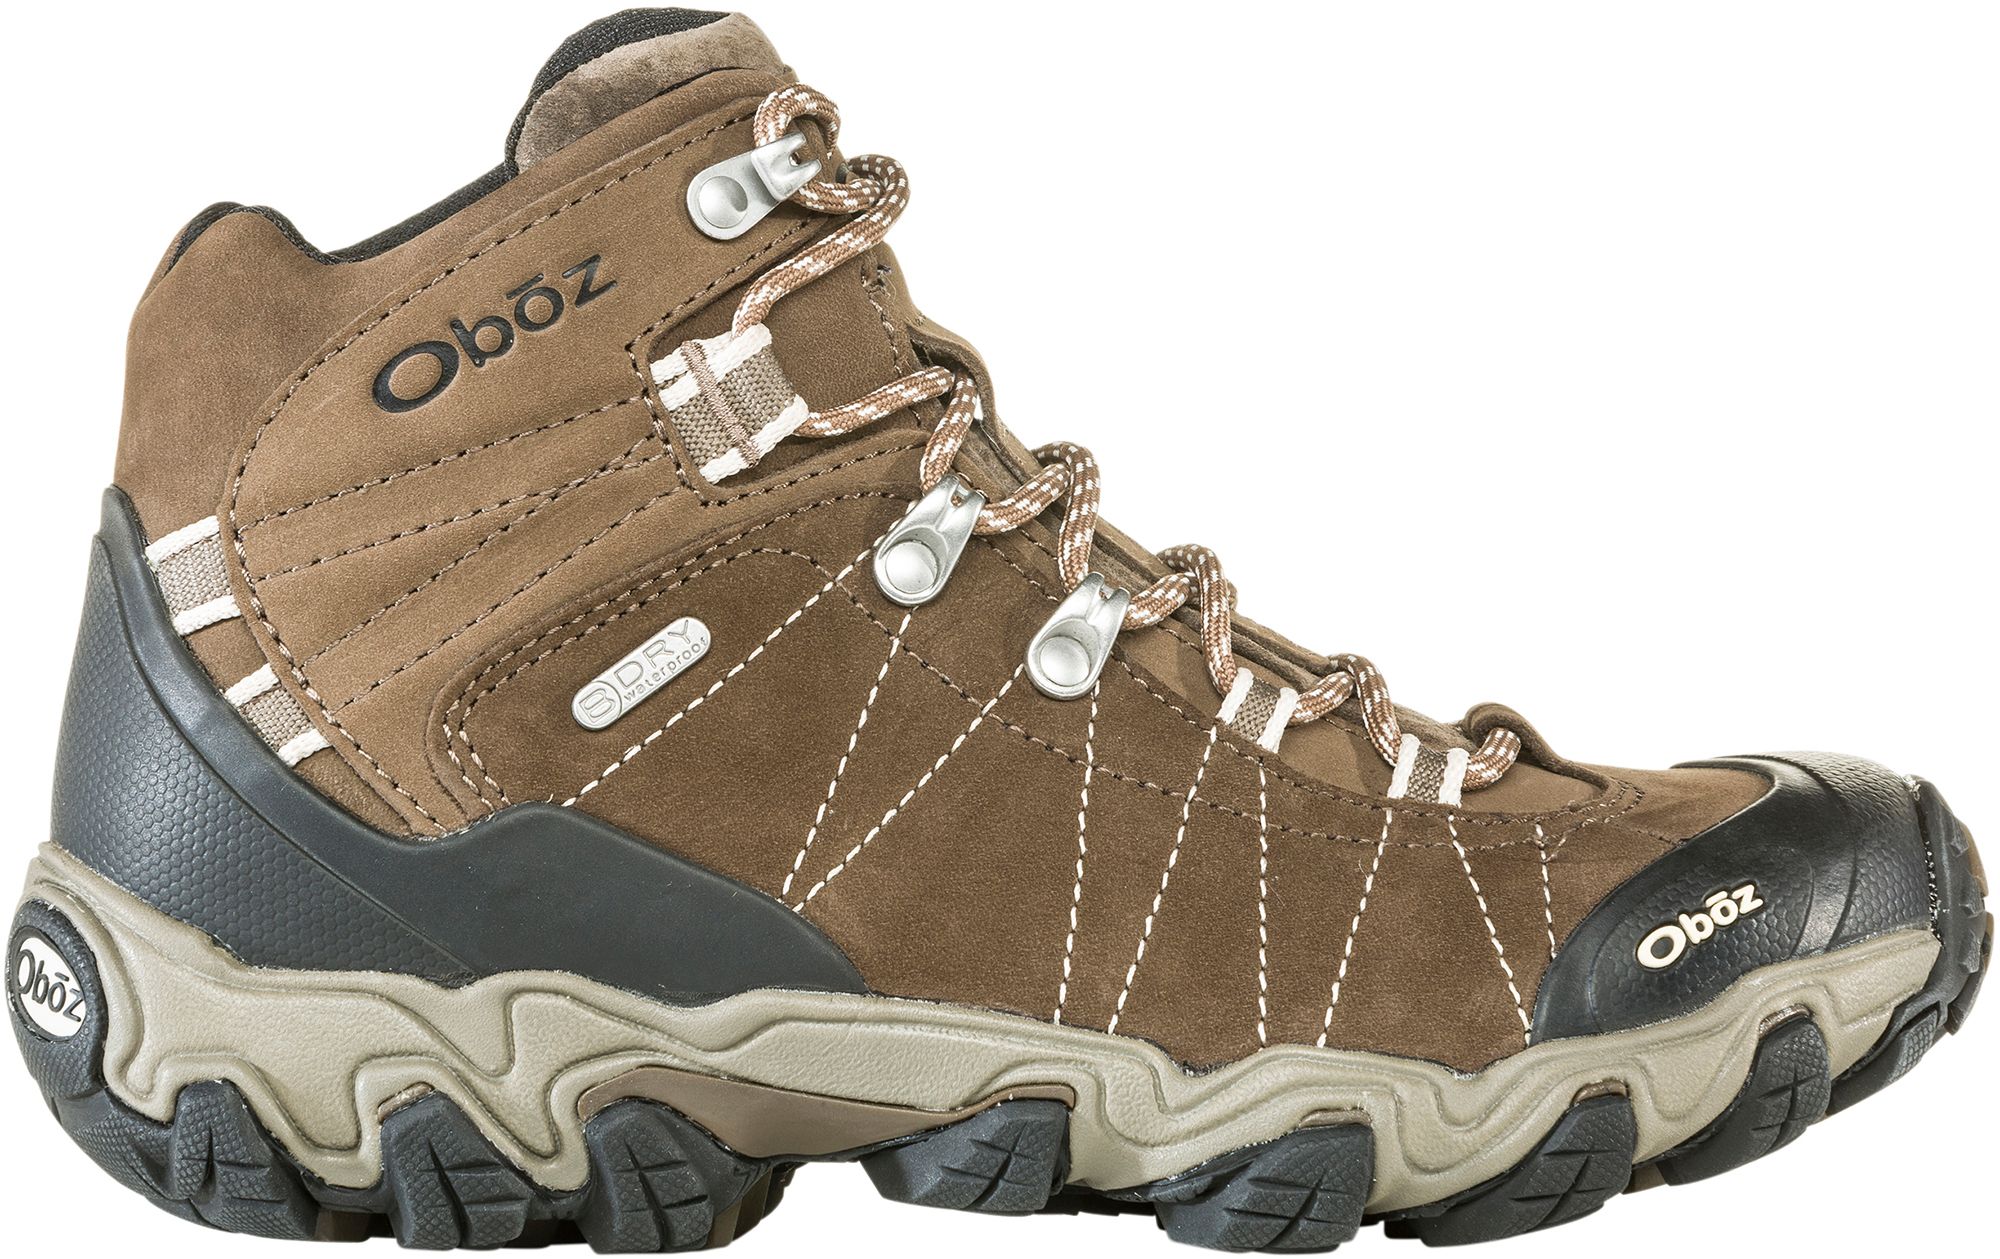 Photos - Trekking Shoes Waterproof Oboz Women's Bridger Mid  Outdoor Boots, Size 9, Walnut 21JSHWWB 